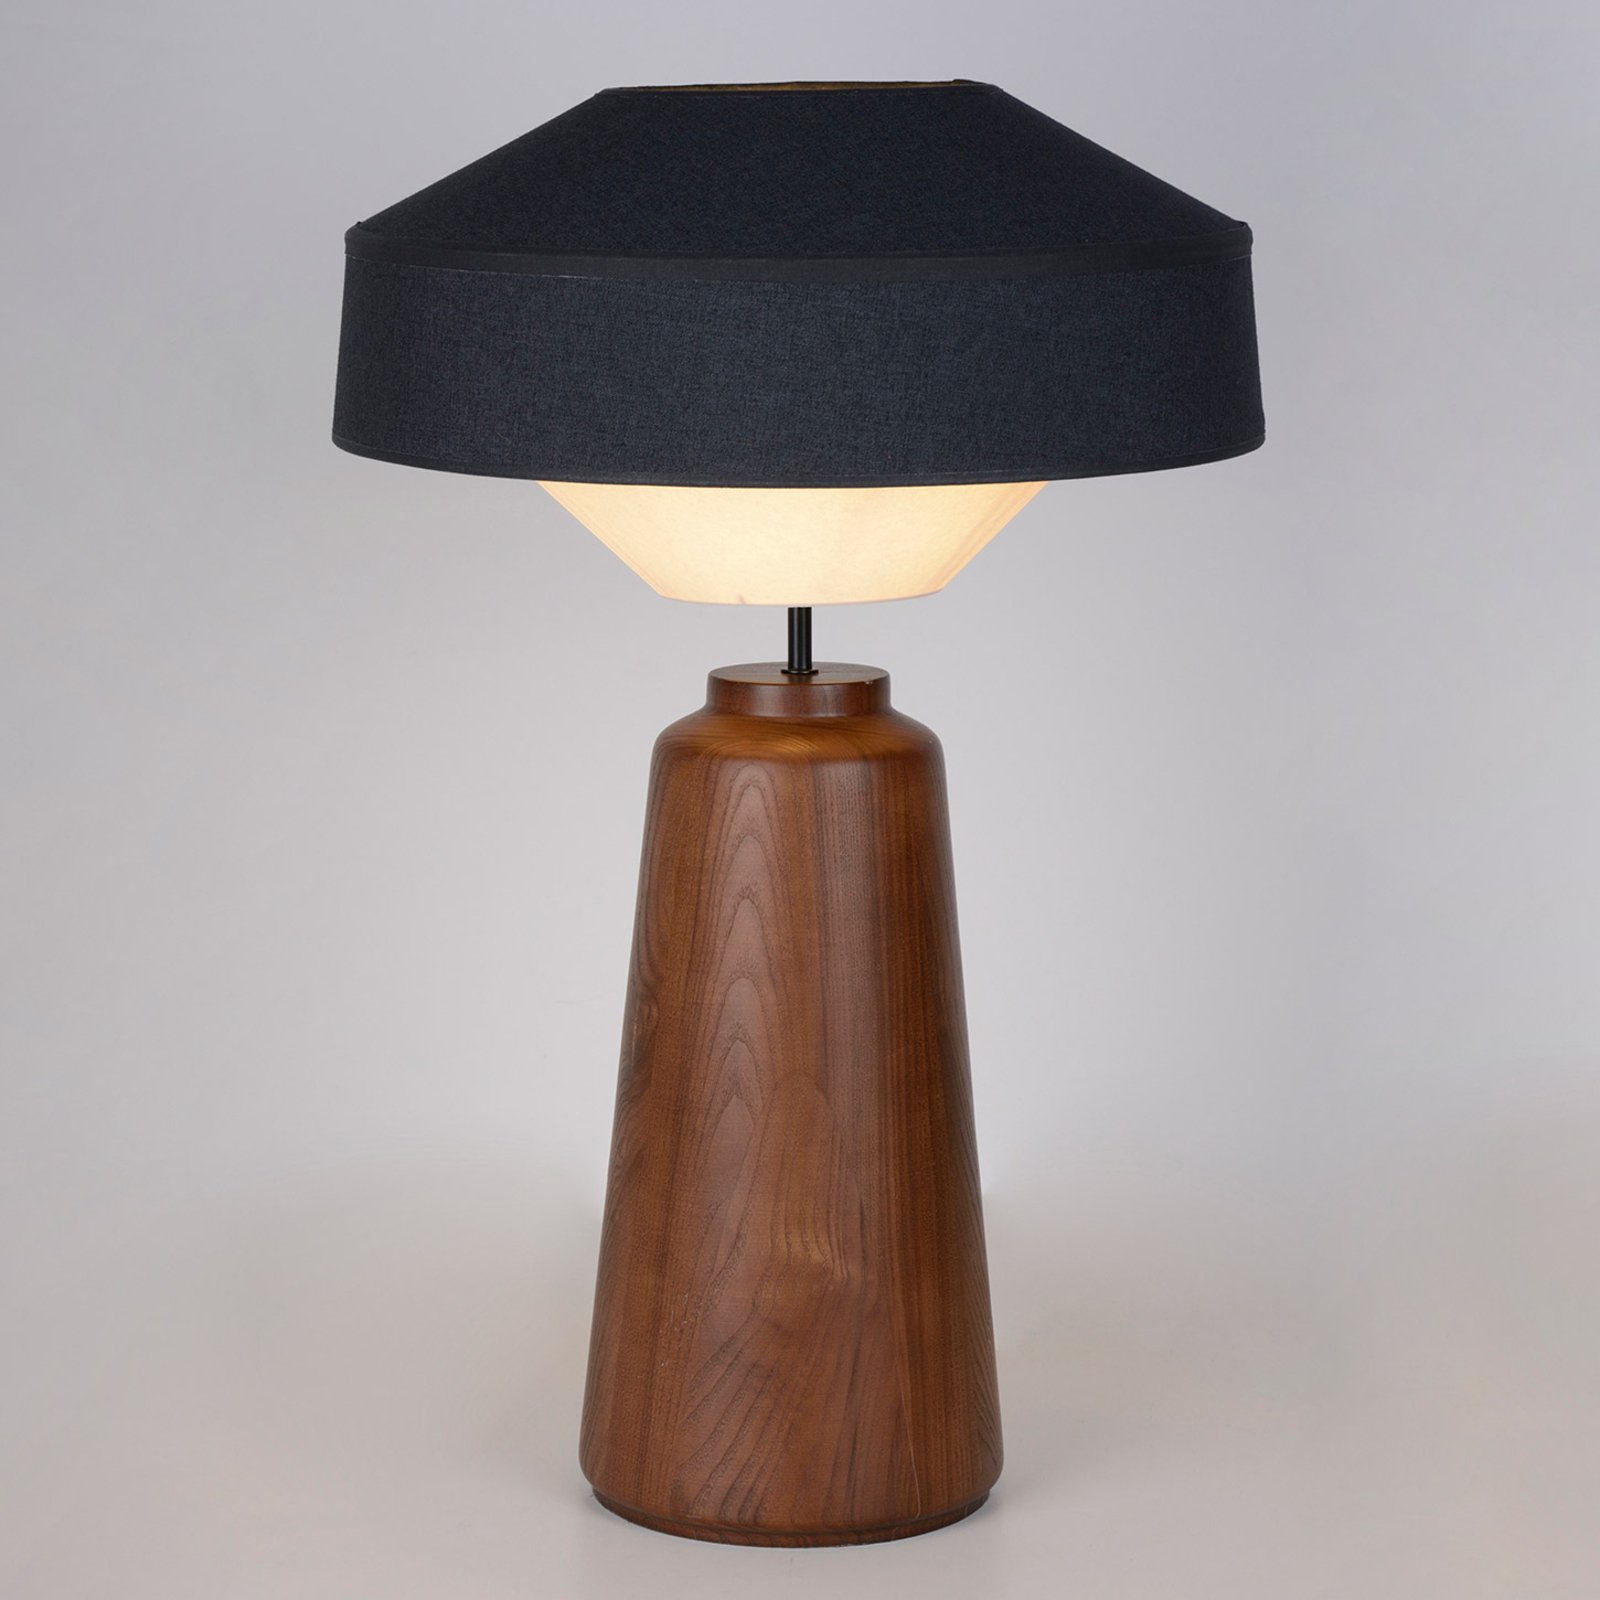 MARKET SET Mokuzaï table lamp suna, height 74 cm